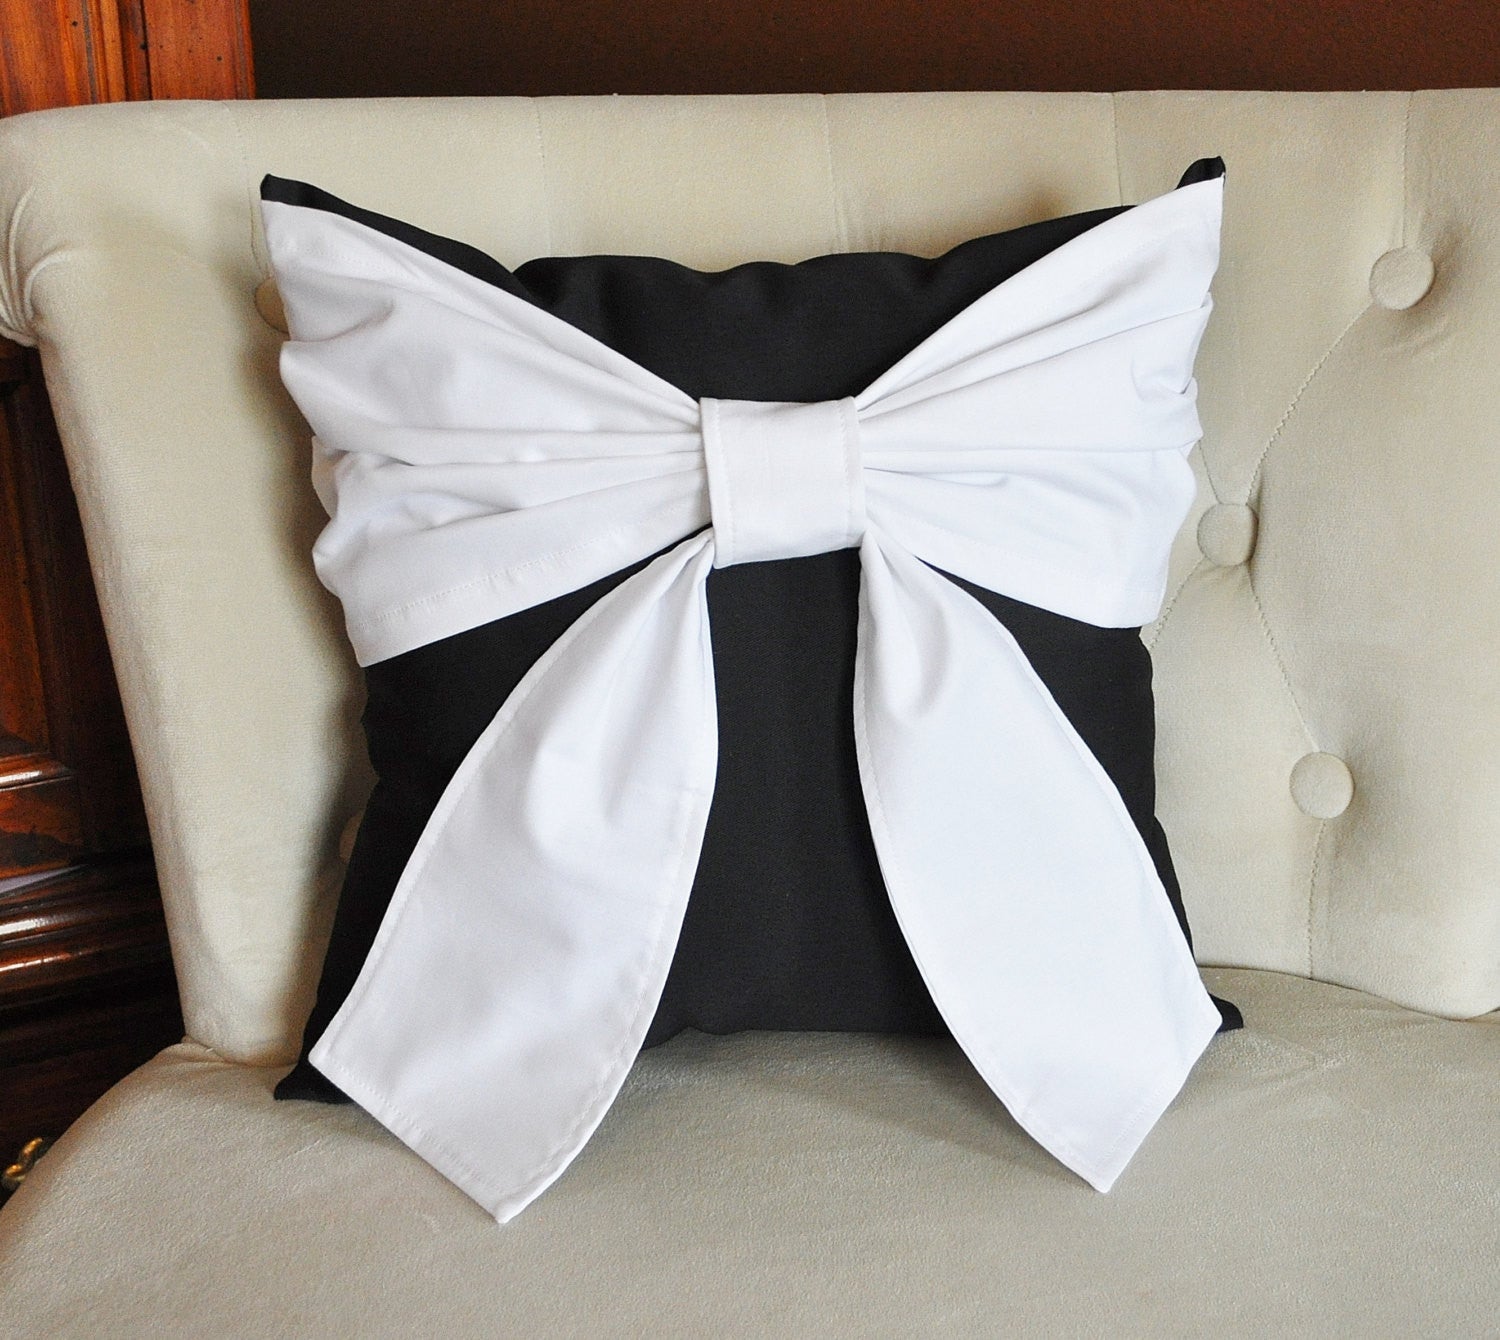 Black and White Big Bow Pillow Decorative Throw Pillow Modern